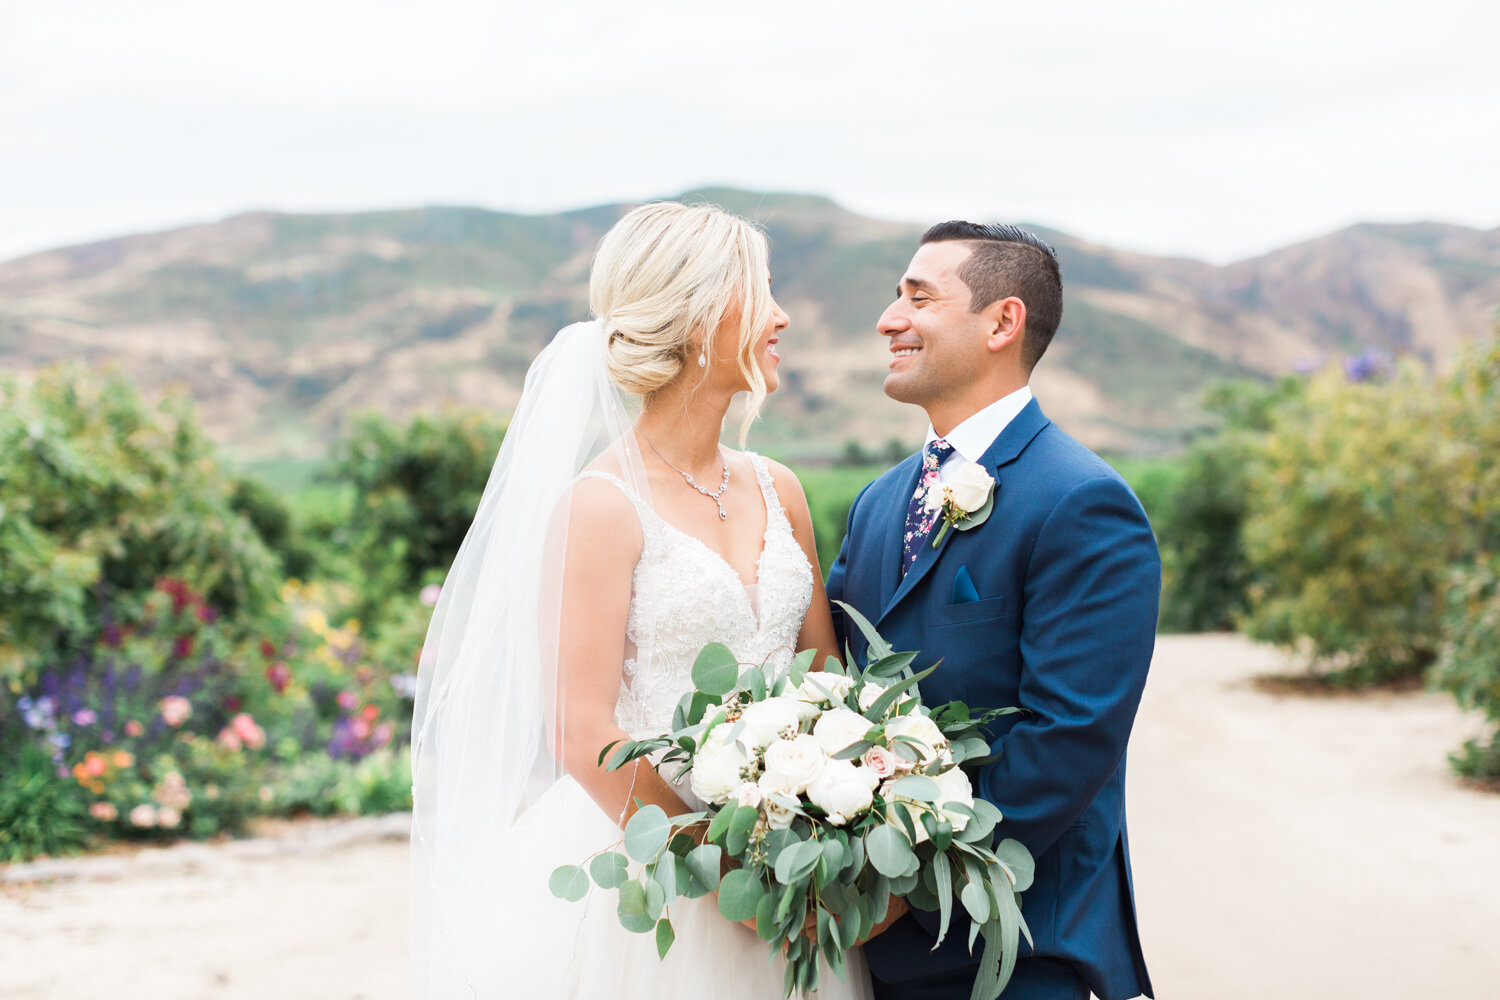 wisteria-photography.com | Wisteria Photography | Gerry Ranch | Weddings Engagement | Southern California Photographer-35.jpg